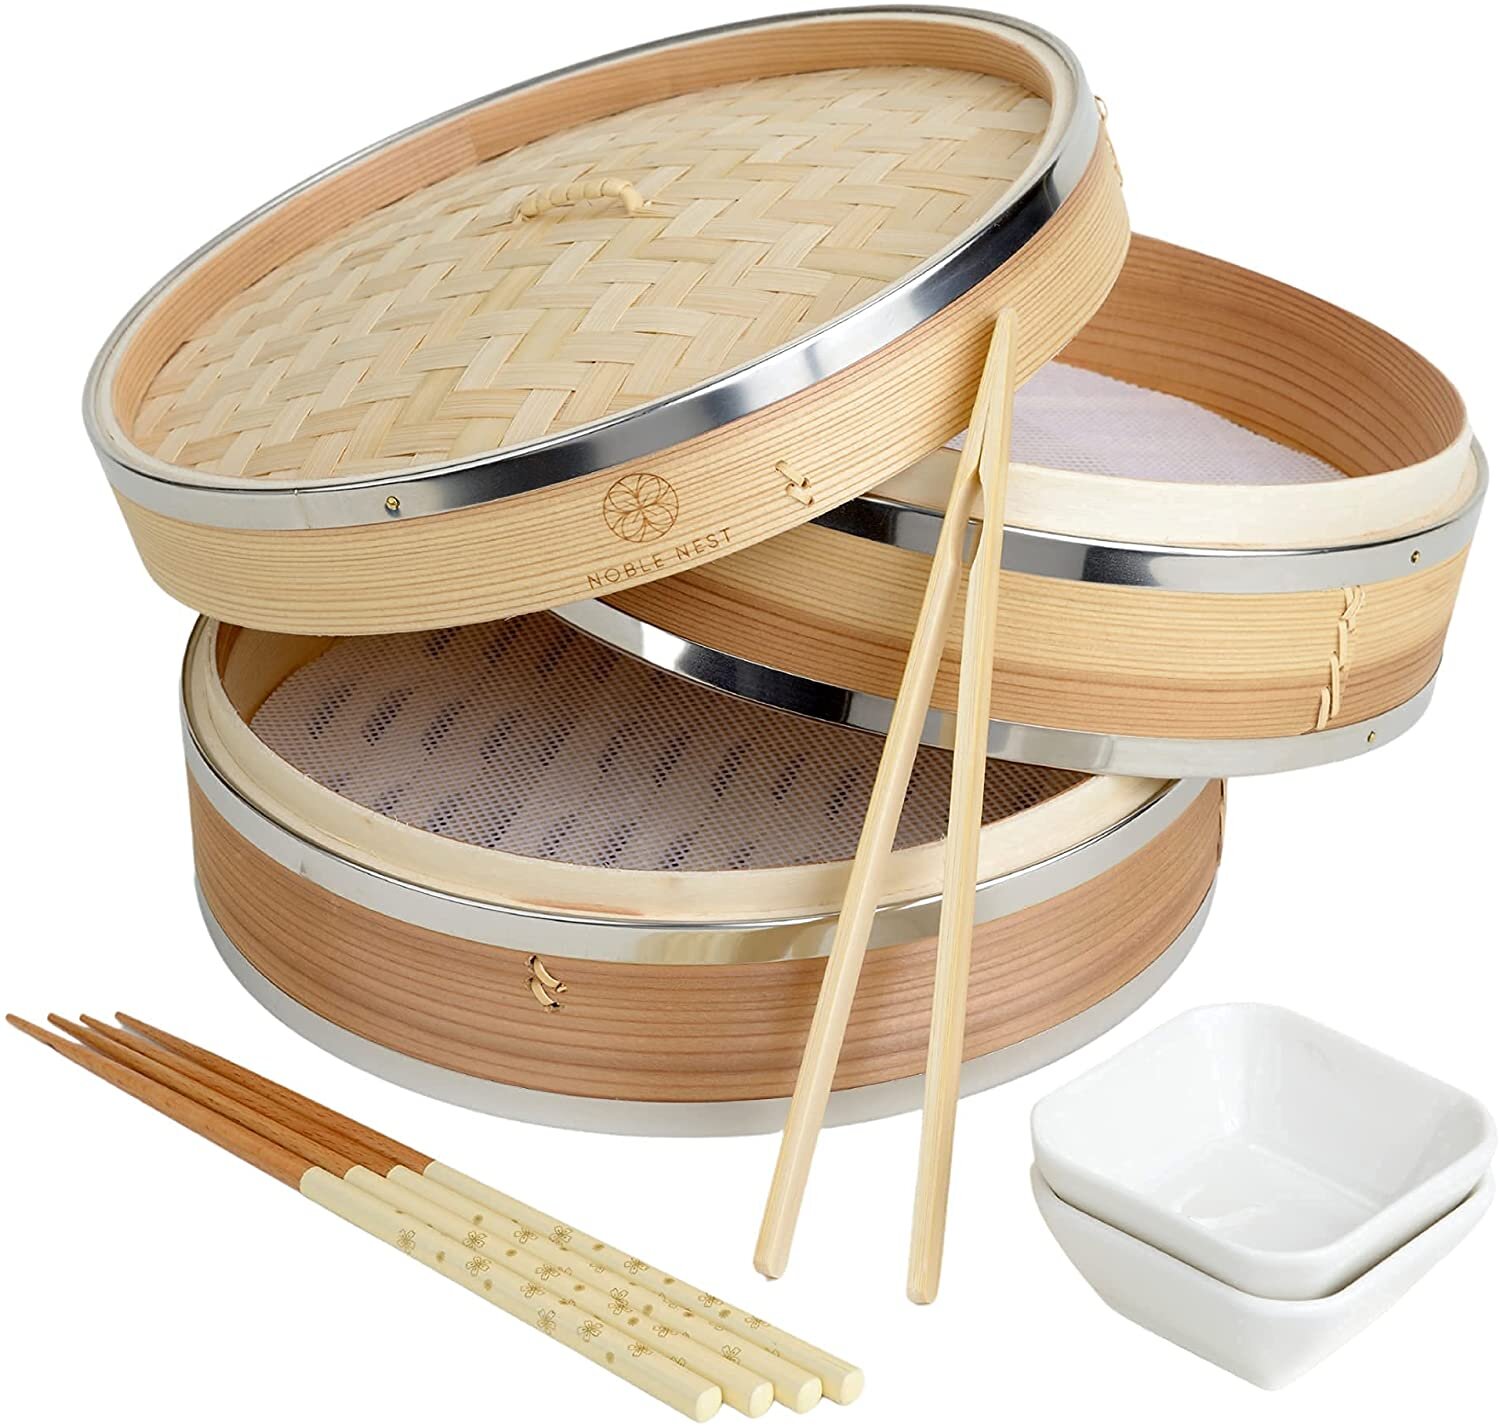 Prime Home Direct Bamboo Steamer Basket 10-inch , 2-Tier Steamer